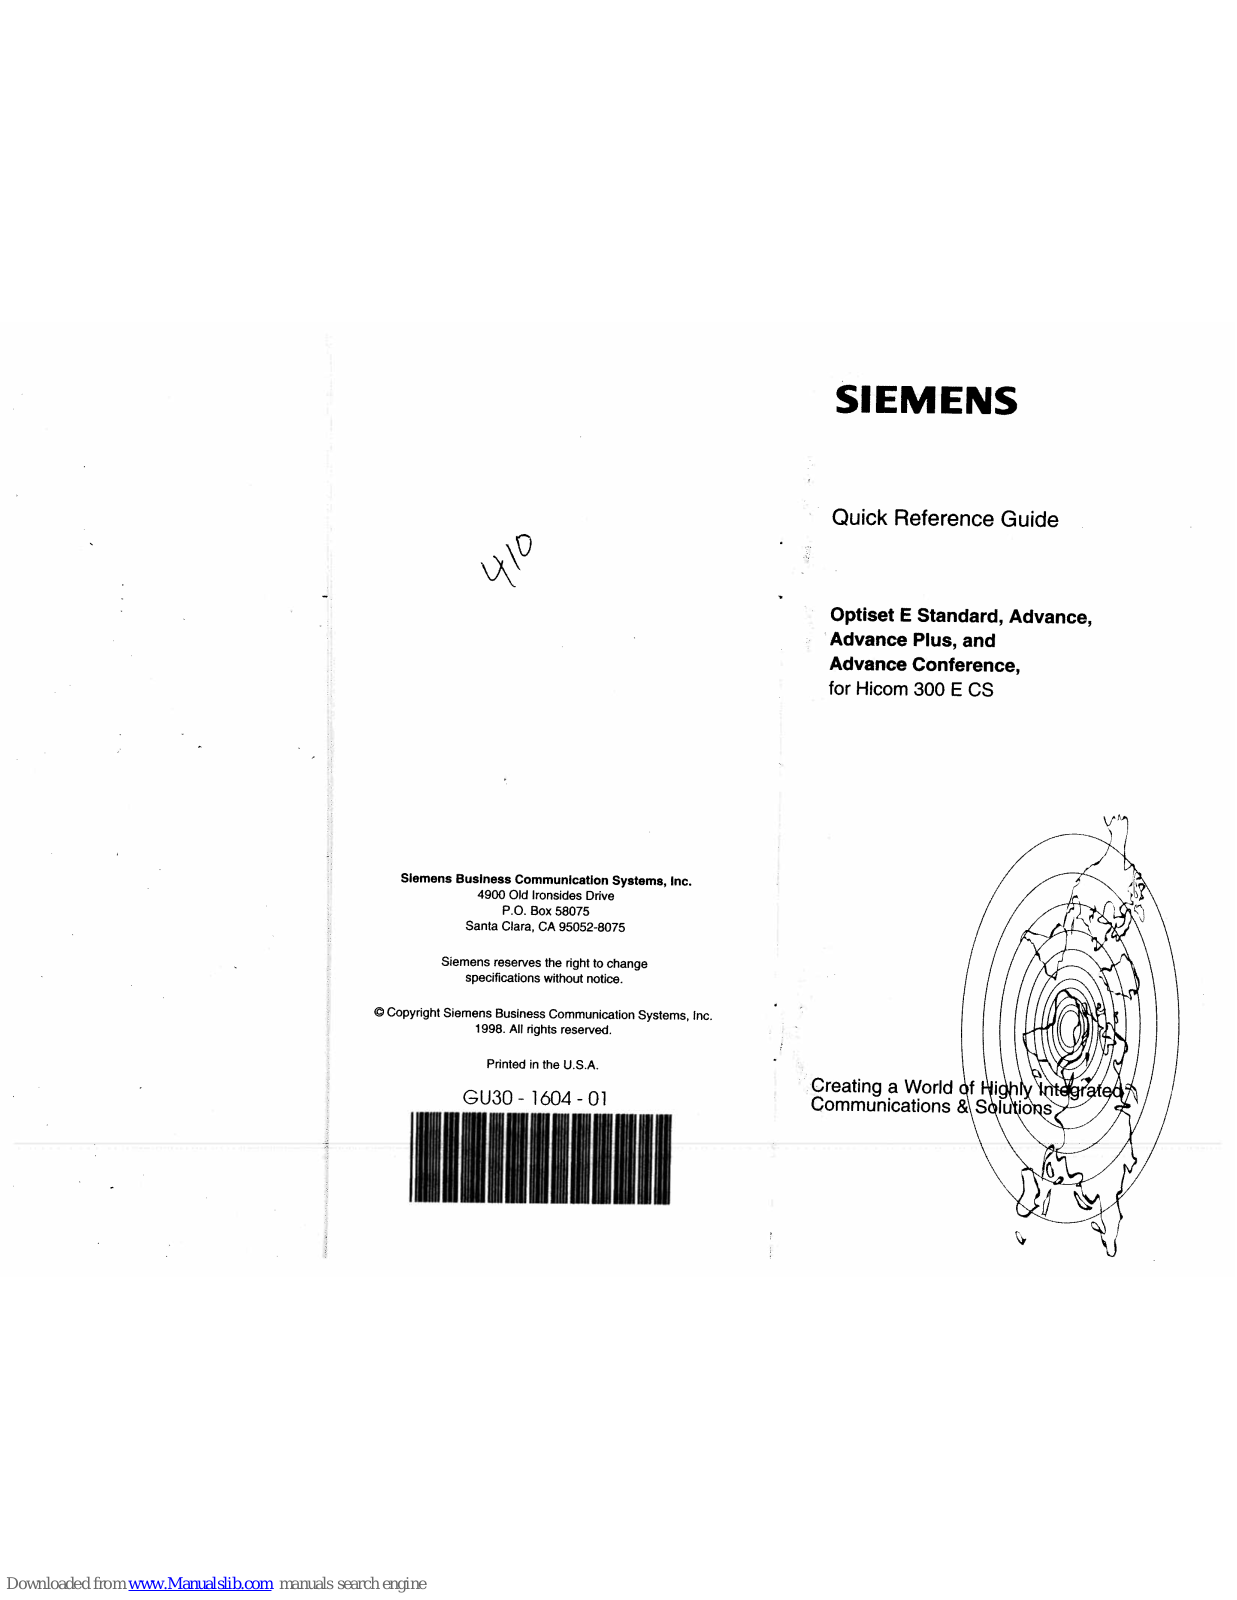 Siemens Optiset E Standart, Advance, Advance Plus, Advance Conference Quick Reference Manual